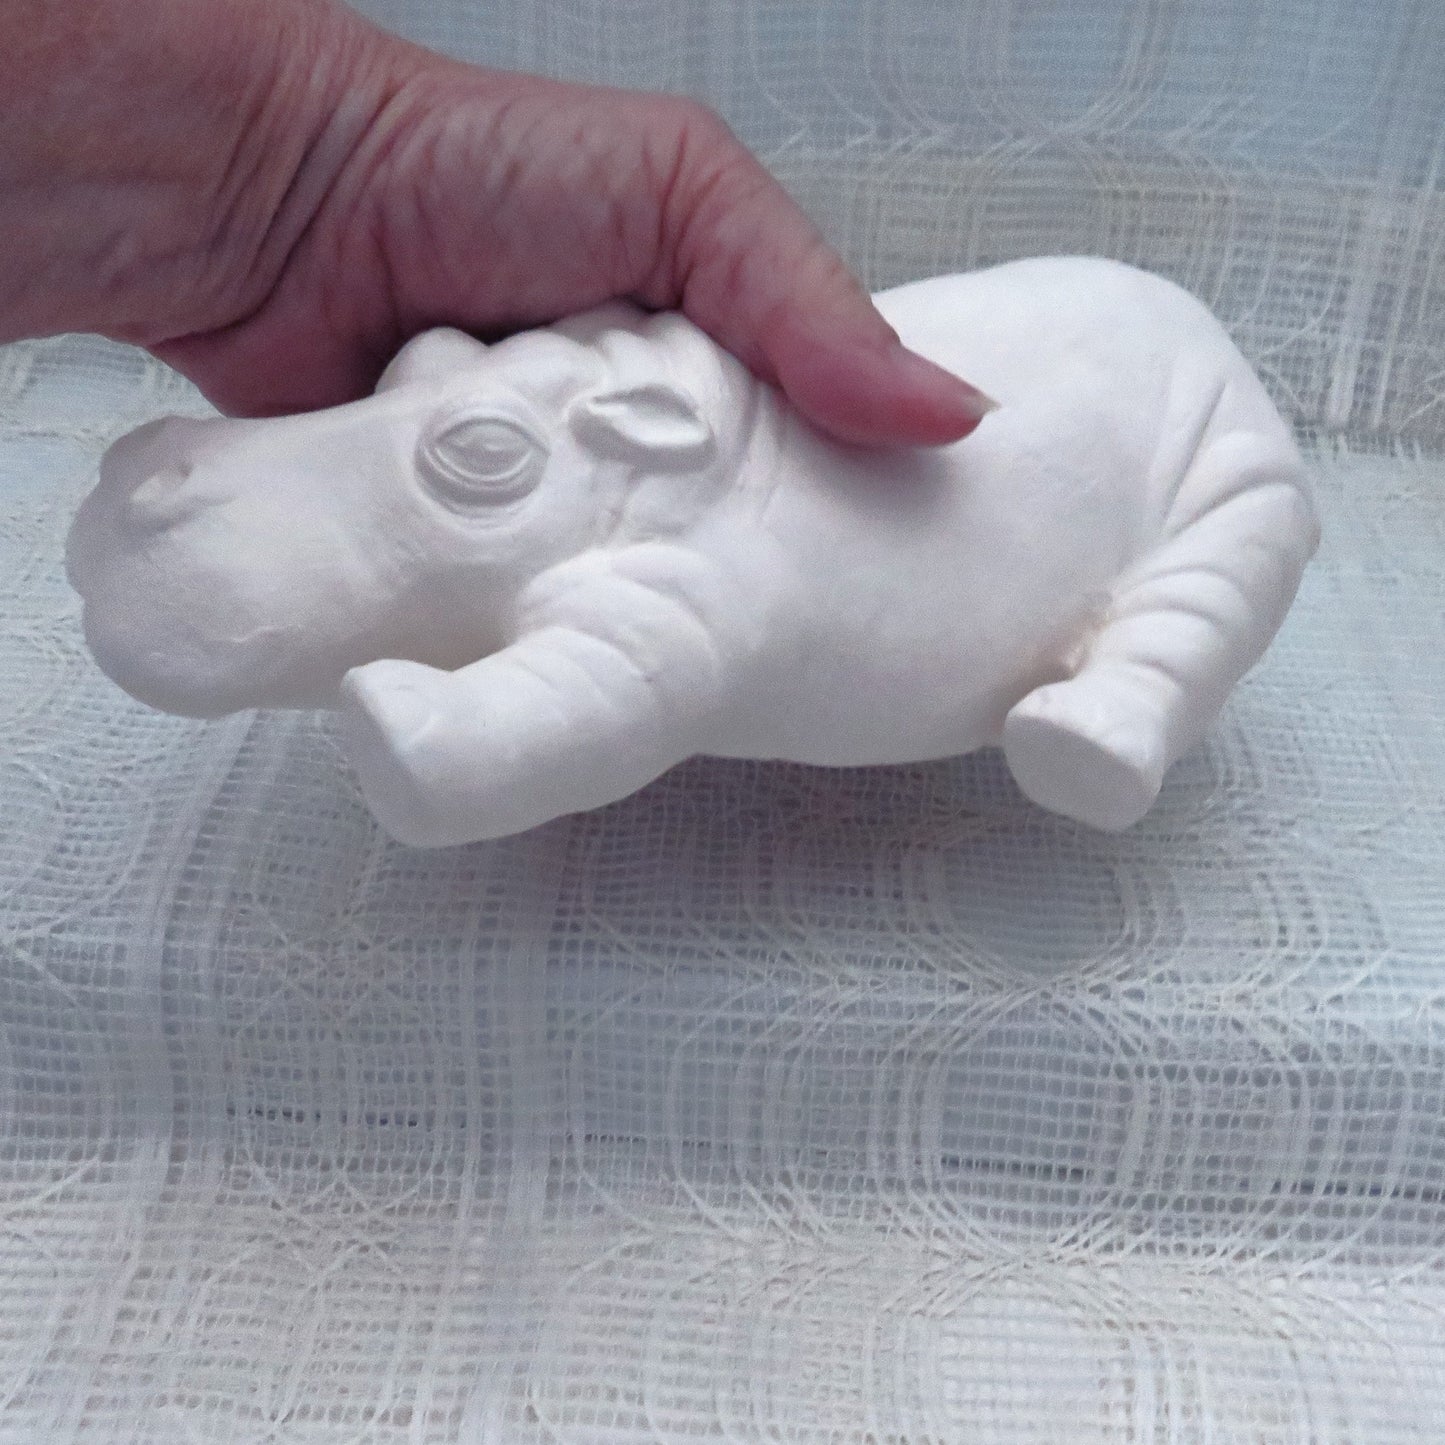 Unpainted Ceramic Hippo Figurine / Bisqueware / Ceramics to Paint / Paintable Ceramics / Hippo Statue / Hippo Decor / Ready to Pain